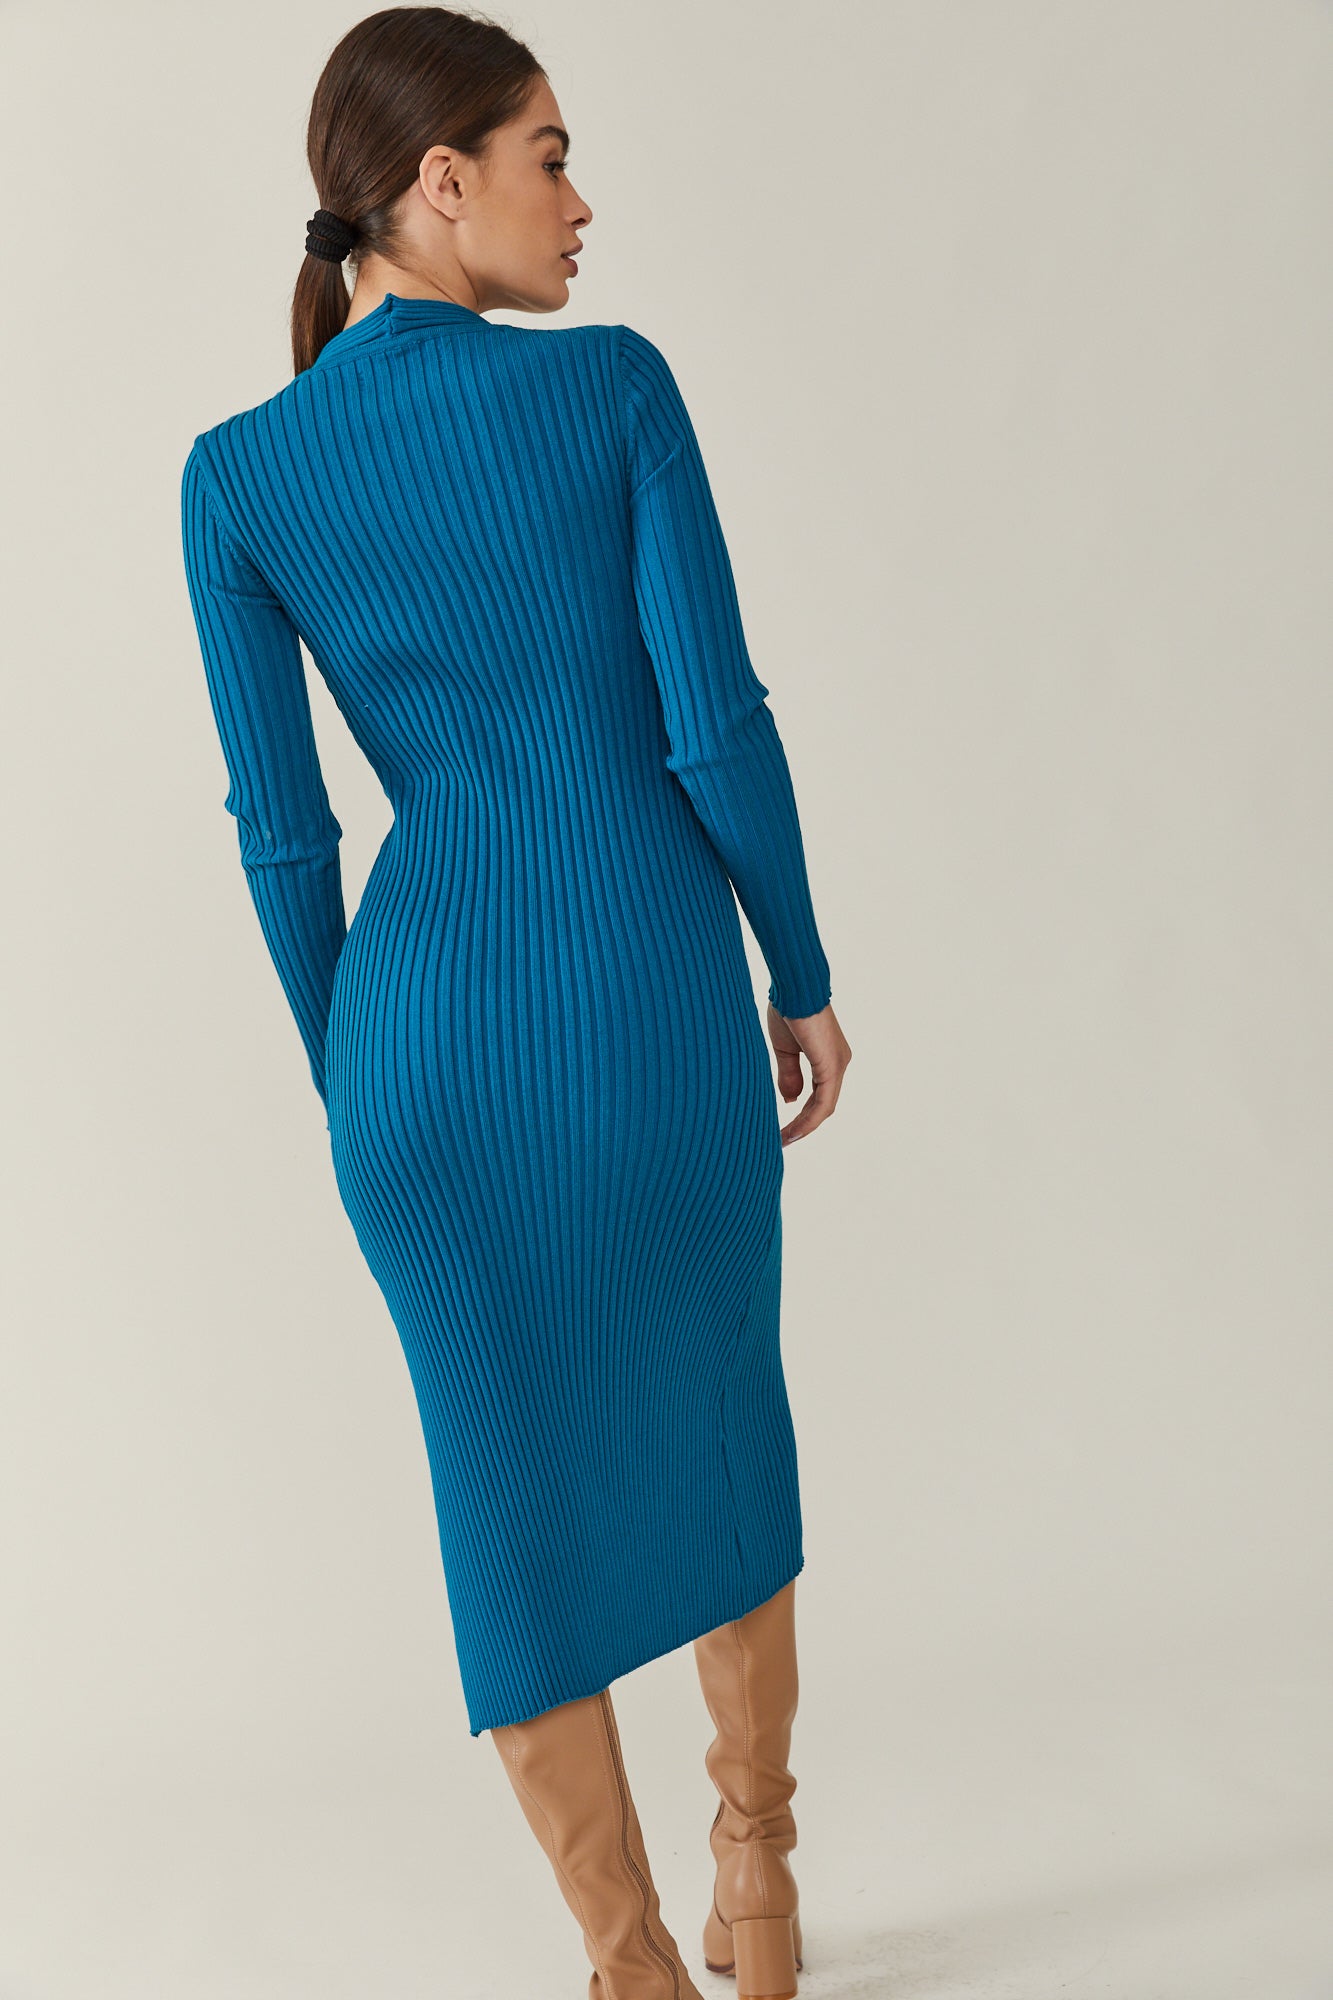 Rubi knit dress